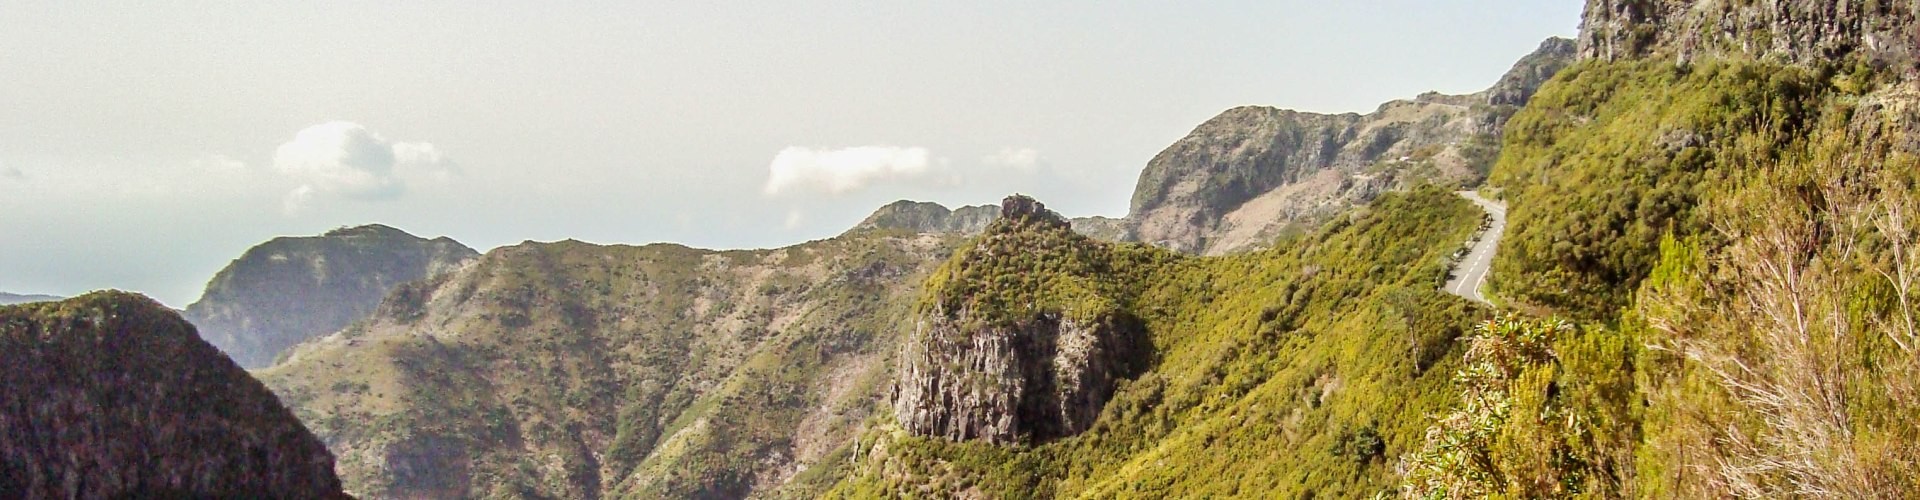 Folhadal Medium Trail Tour in Madeira Island